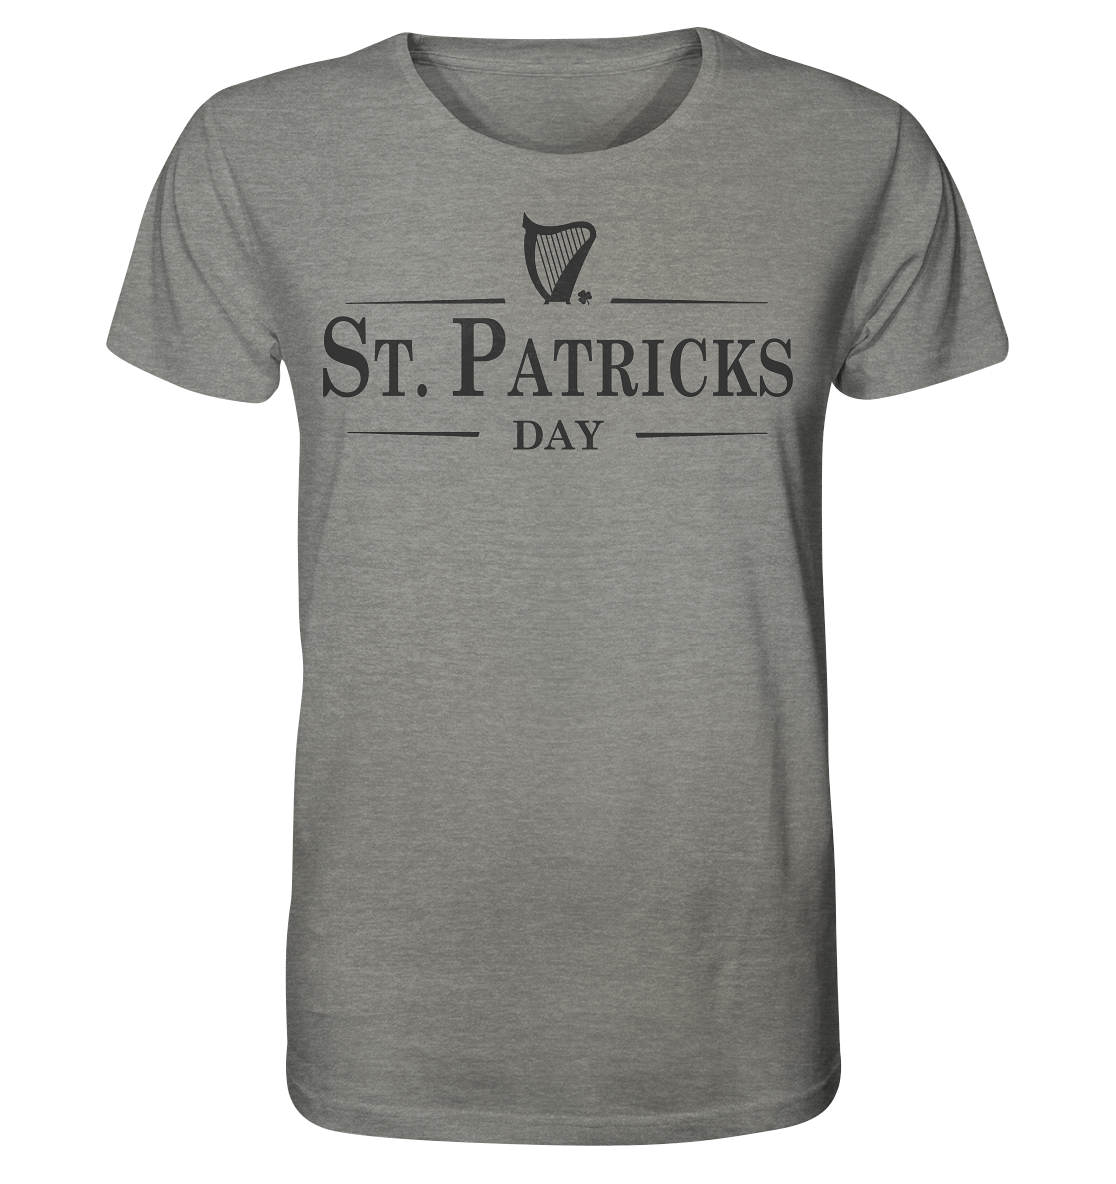 St. Patricks Day "Stout" - Organic Shirt (meliert)